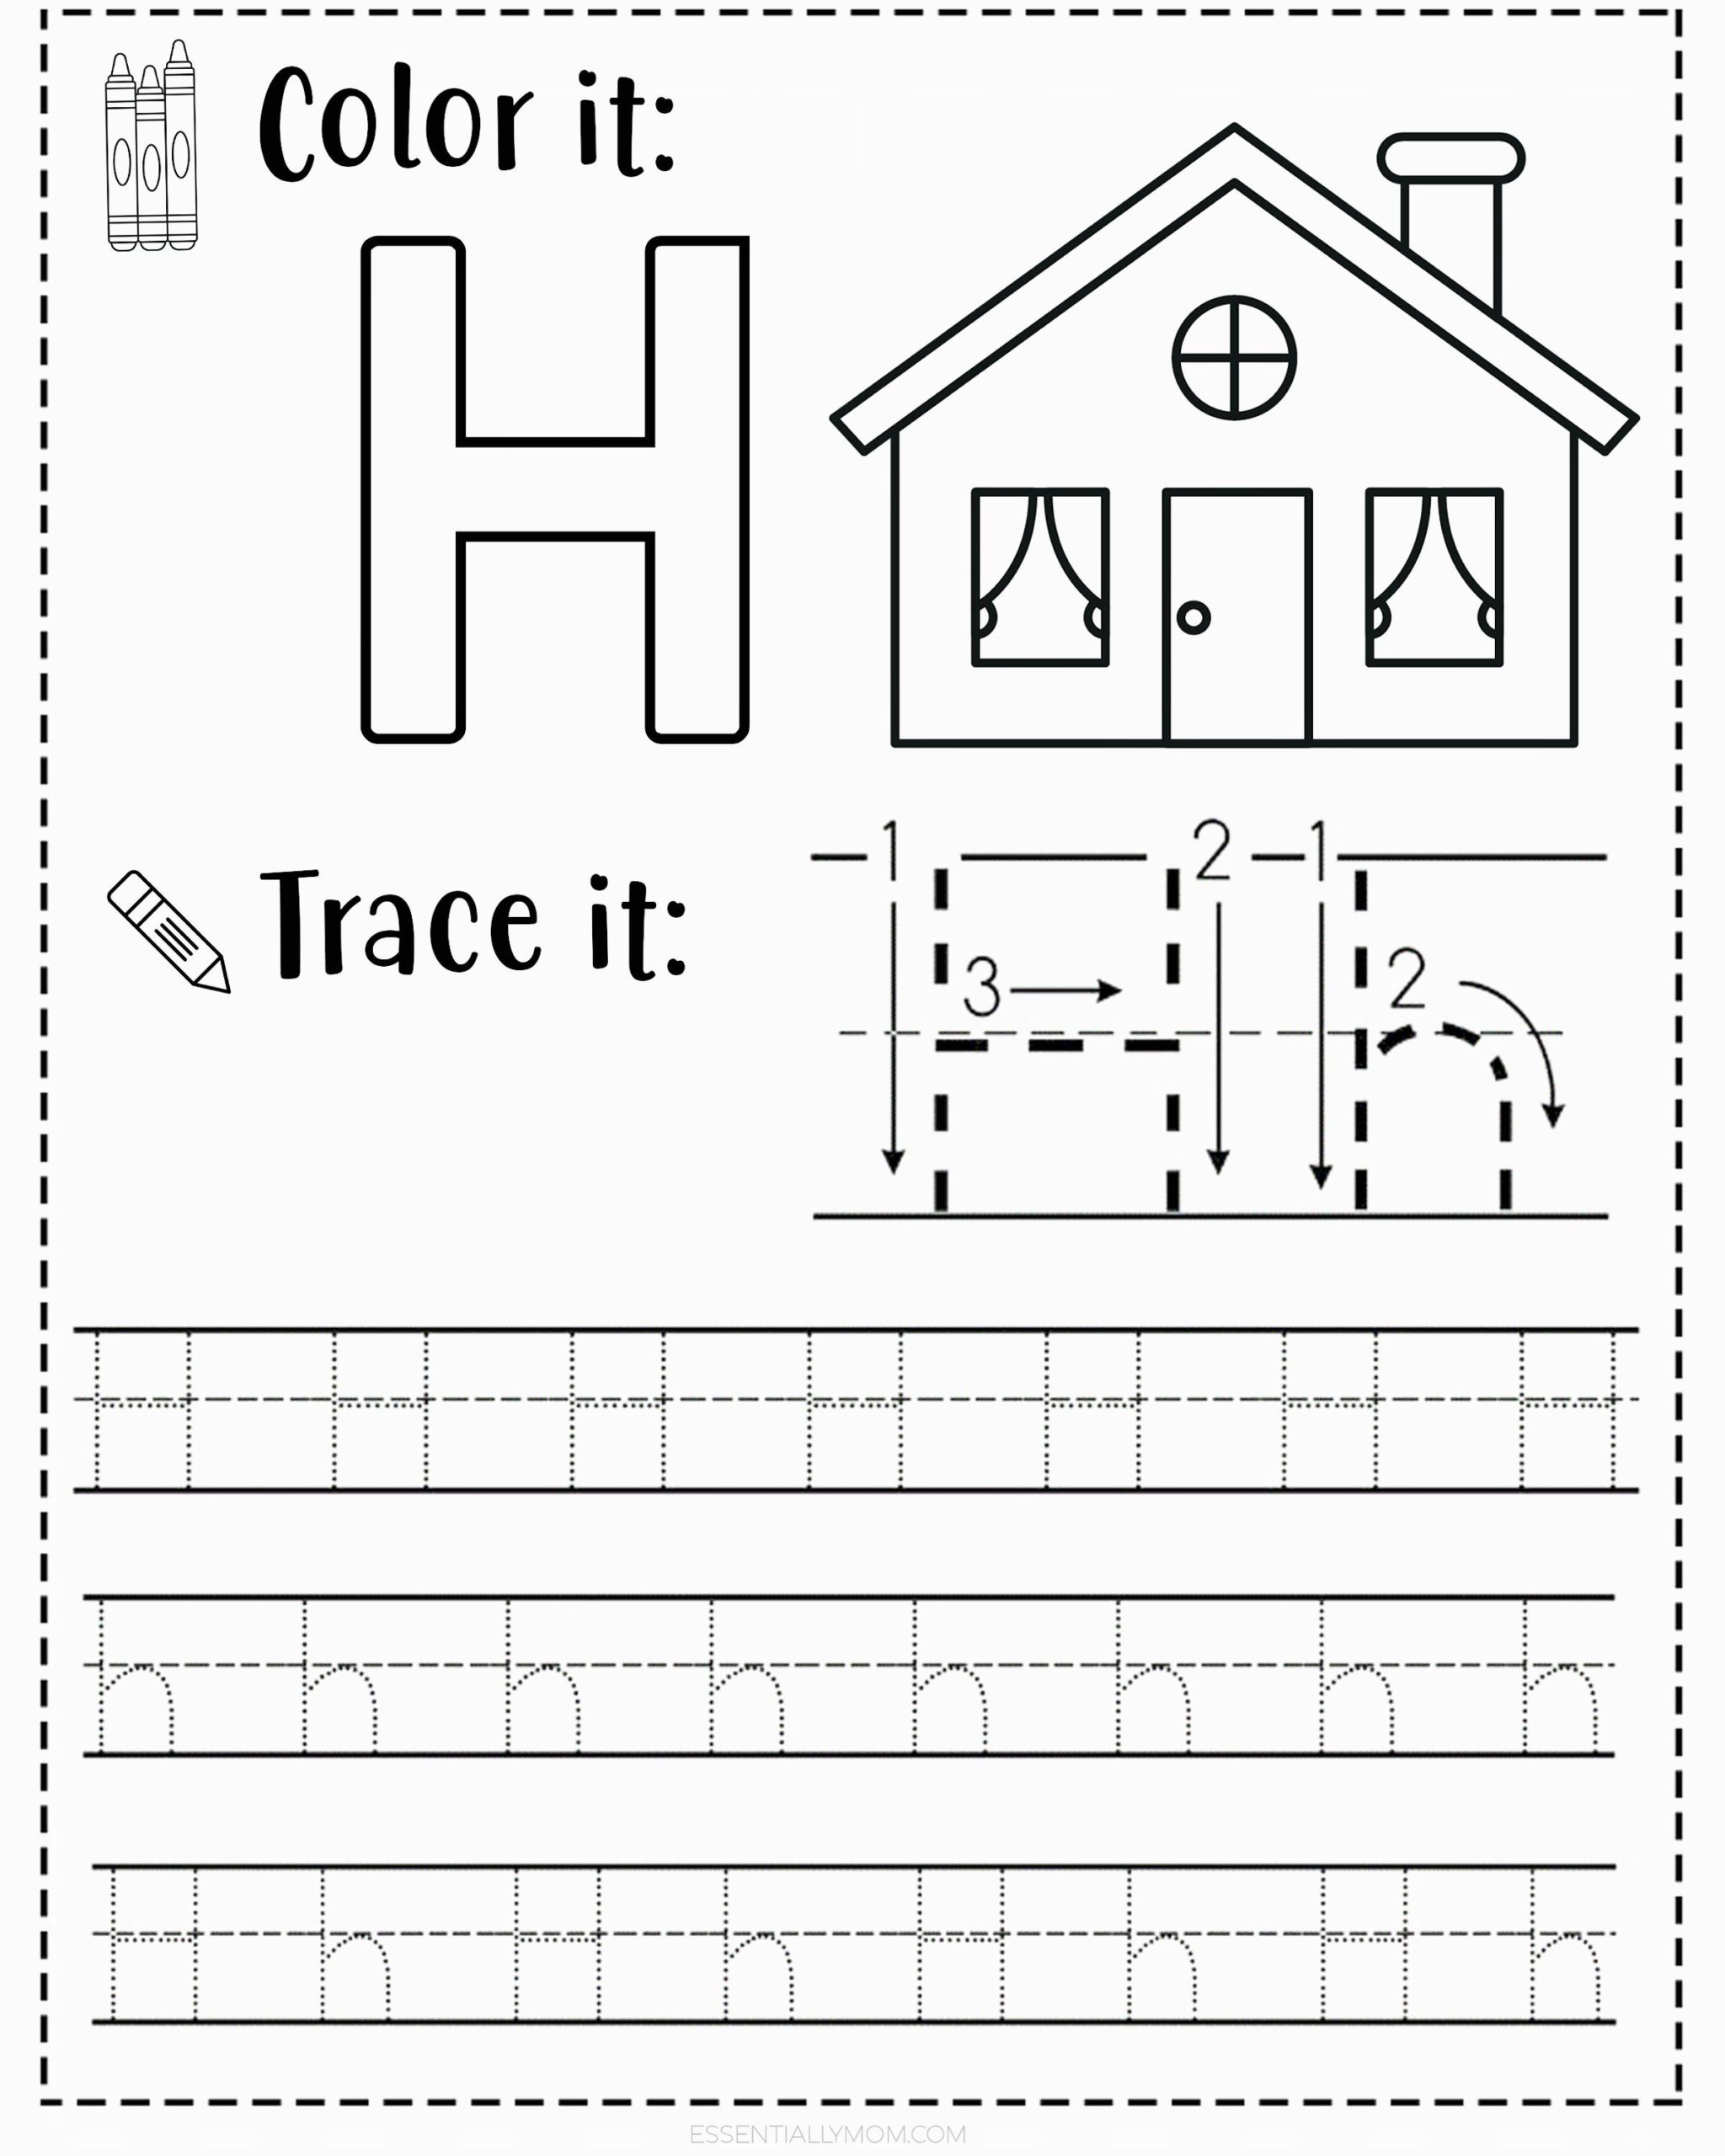 free-alphabet-tracing-worksheets-for-preschoolers